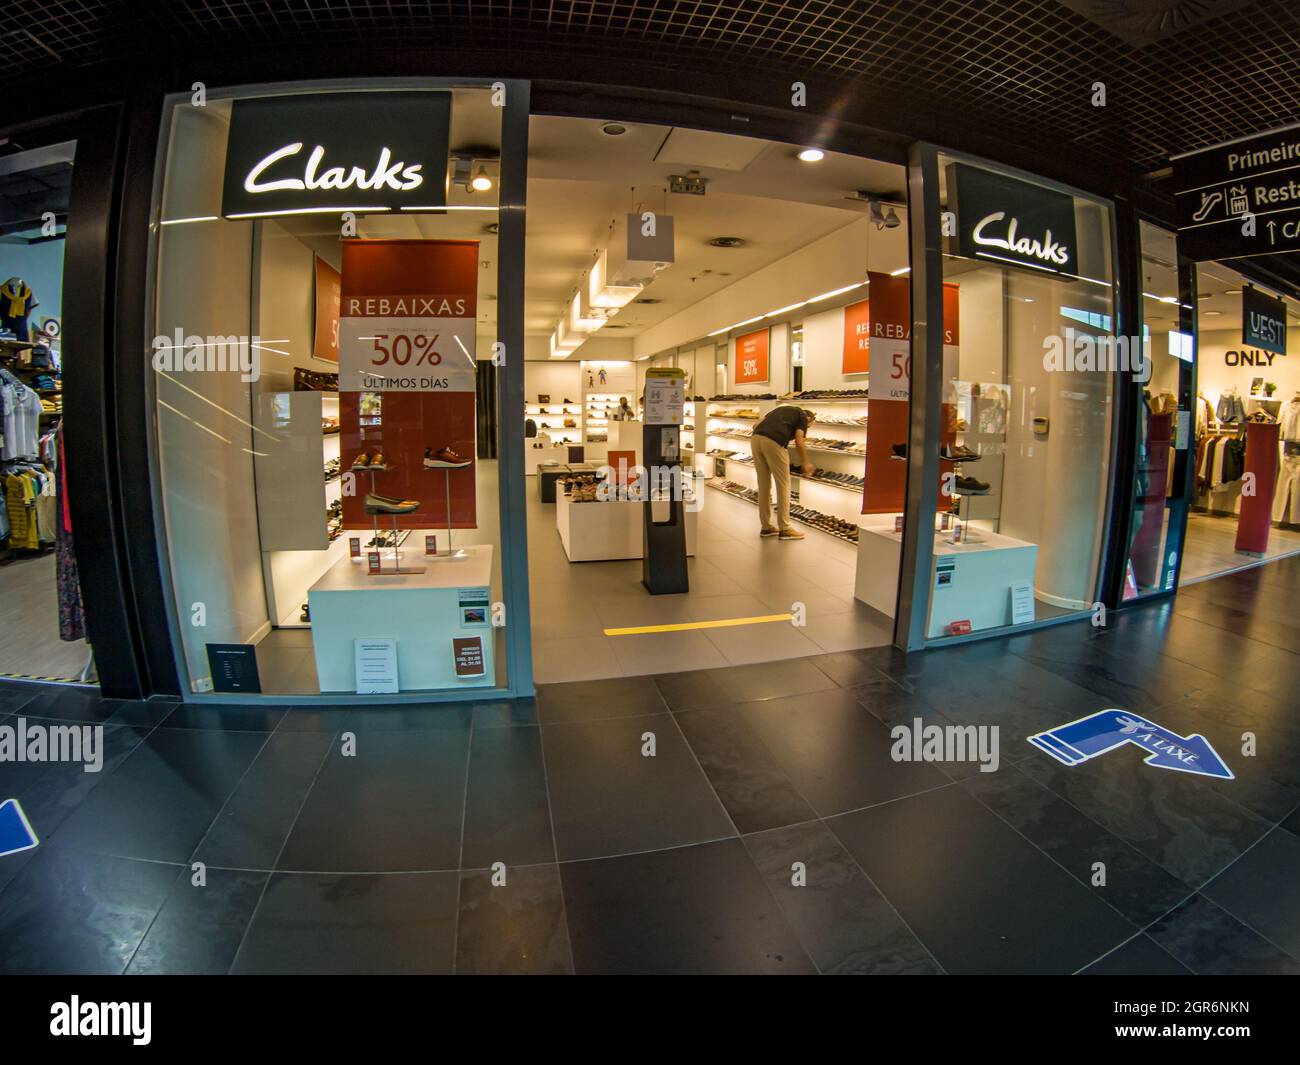 VIGO, SPAIN - Sep 10, 2021: Clarks branded shoe store area in the mall of Vigo, Spain Stock Photo -